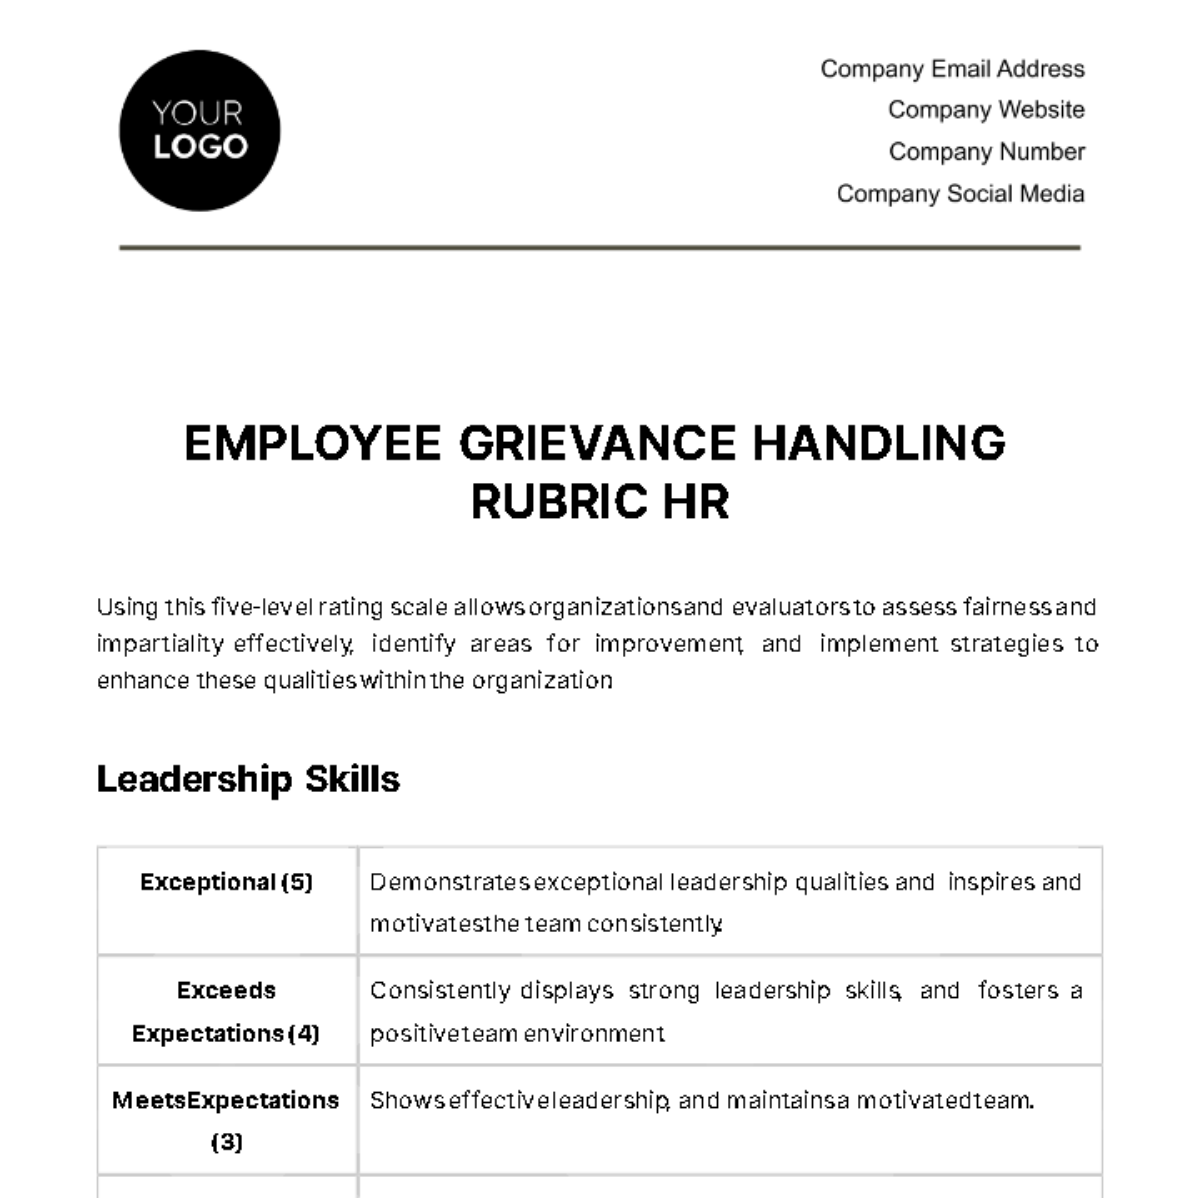 Free Employee Grievance Handling Rubric HR Template